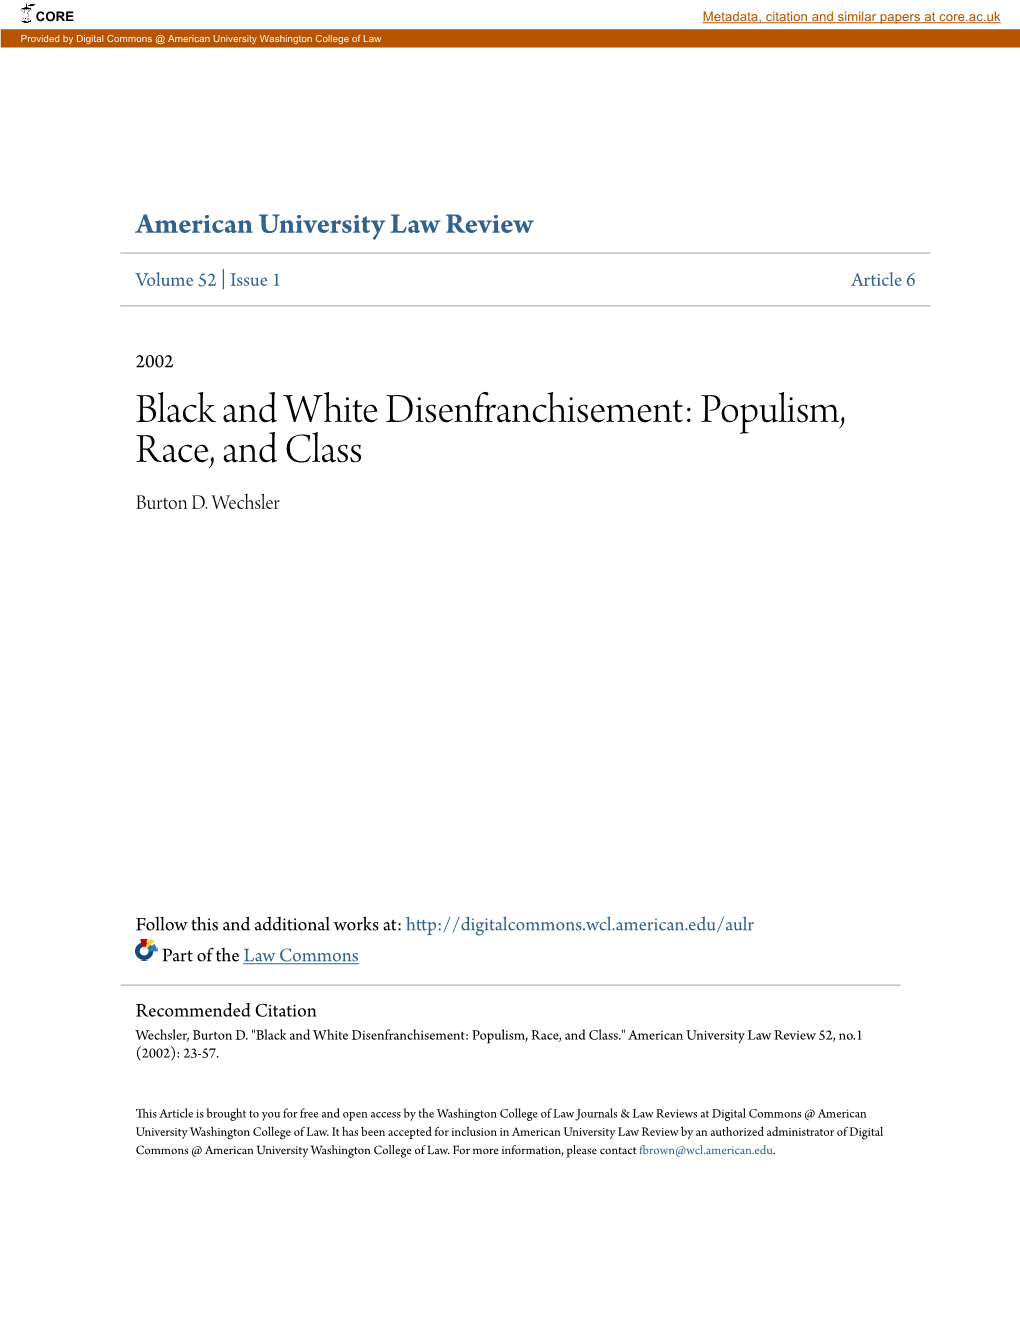 Black and White Disenfranchisement: Populism, Race, and Class Burton D